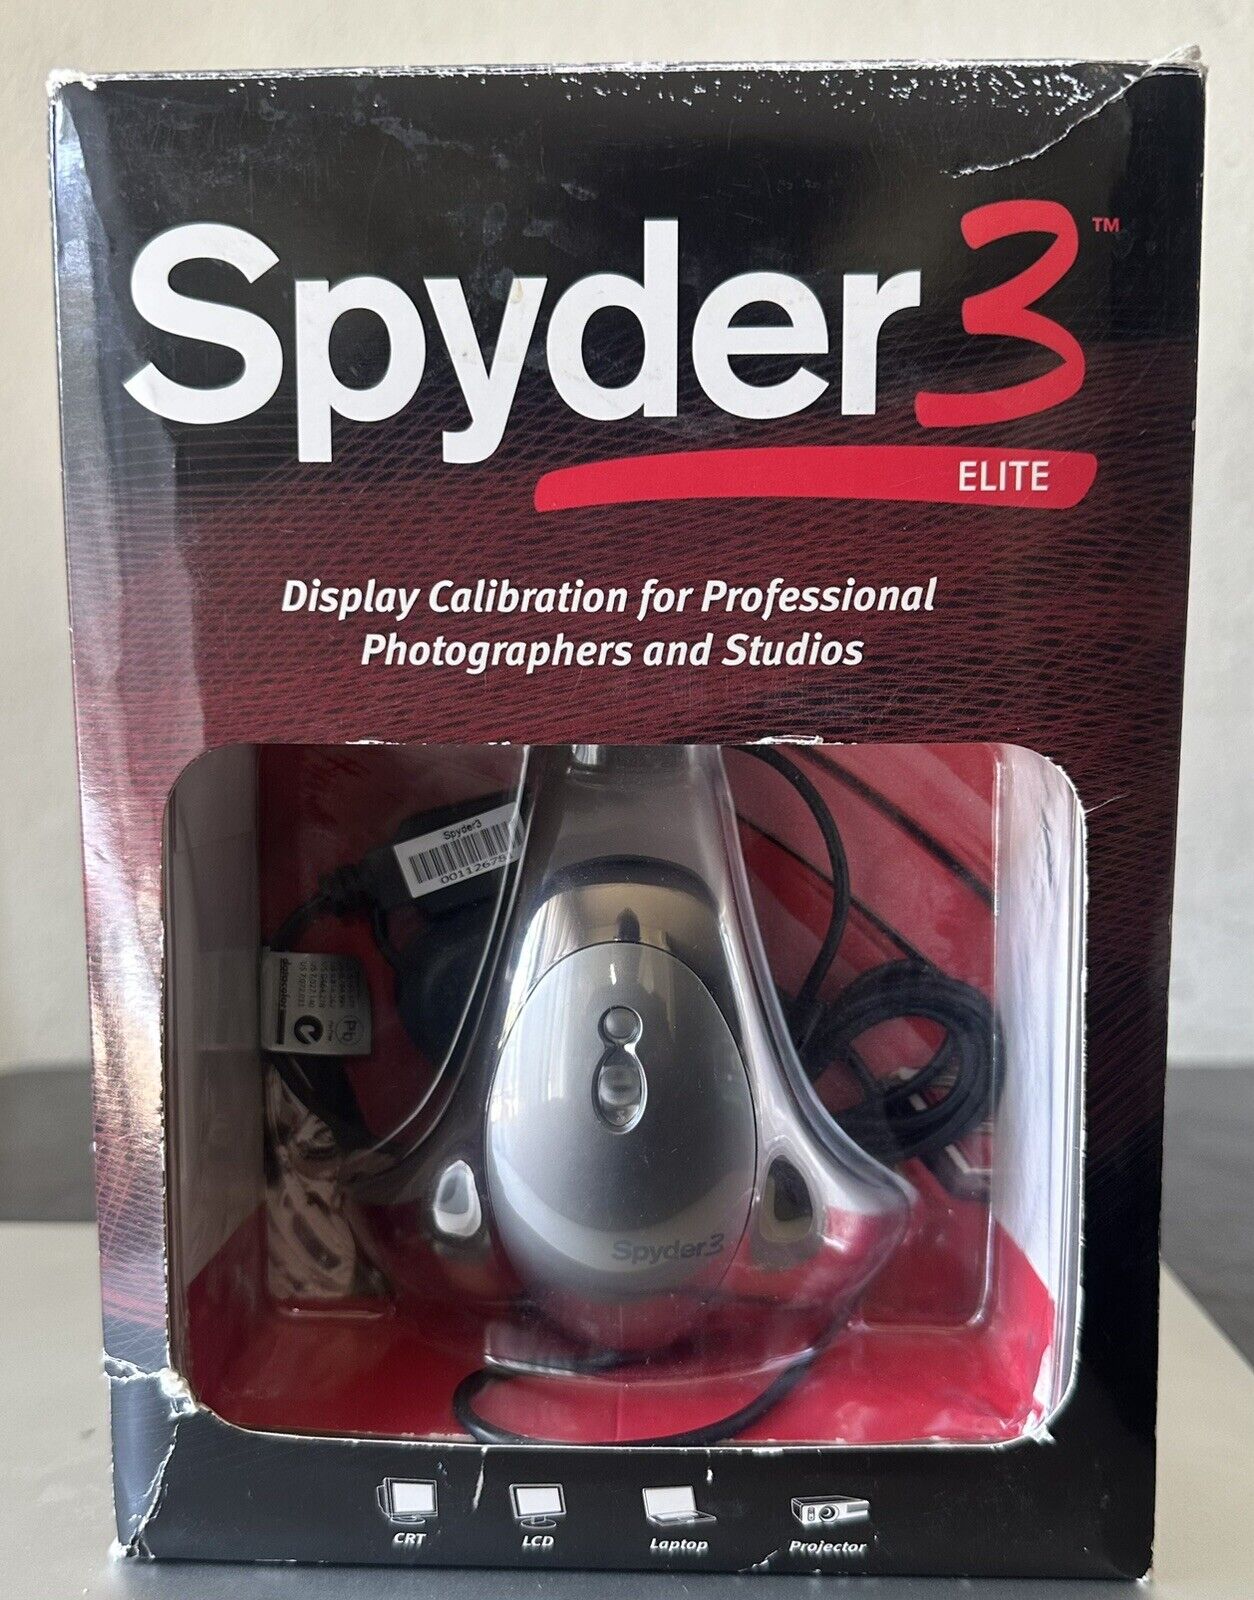 Datacolor Spyder3 Elite USB Display Calibration for Professional Photographers